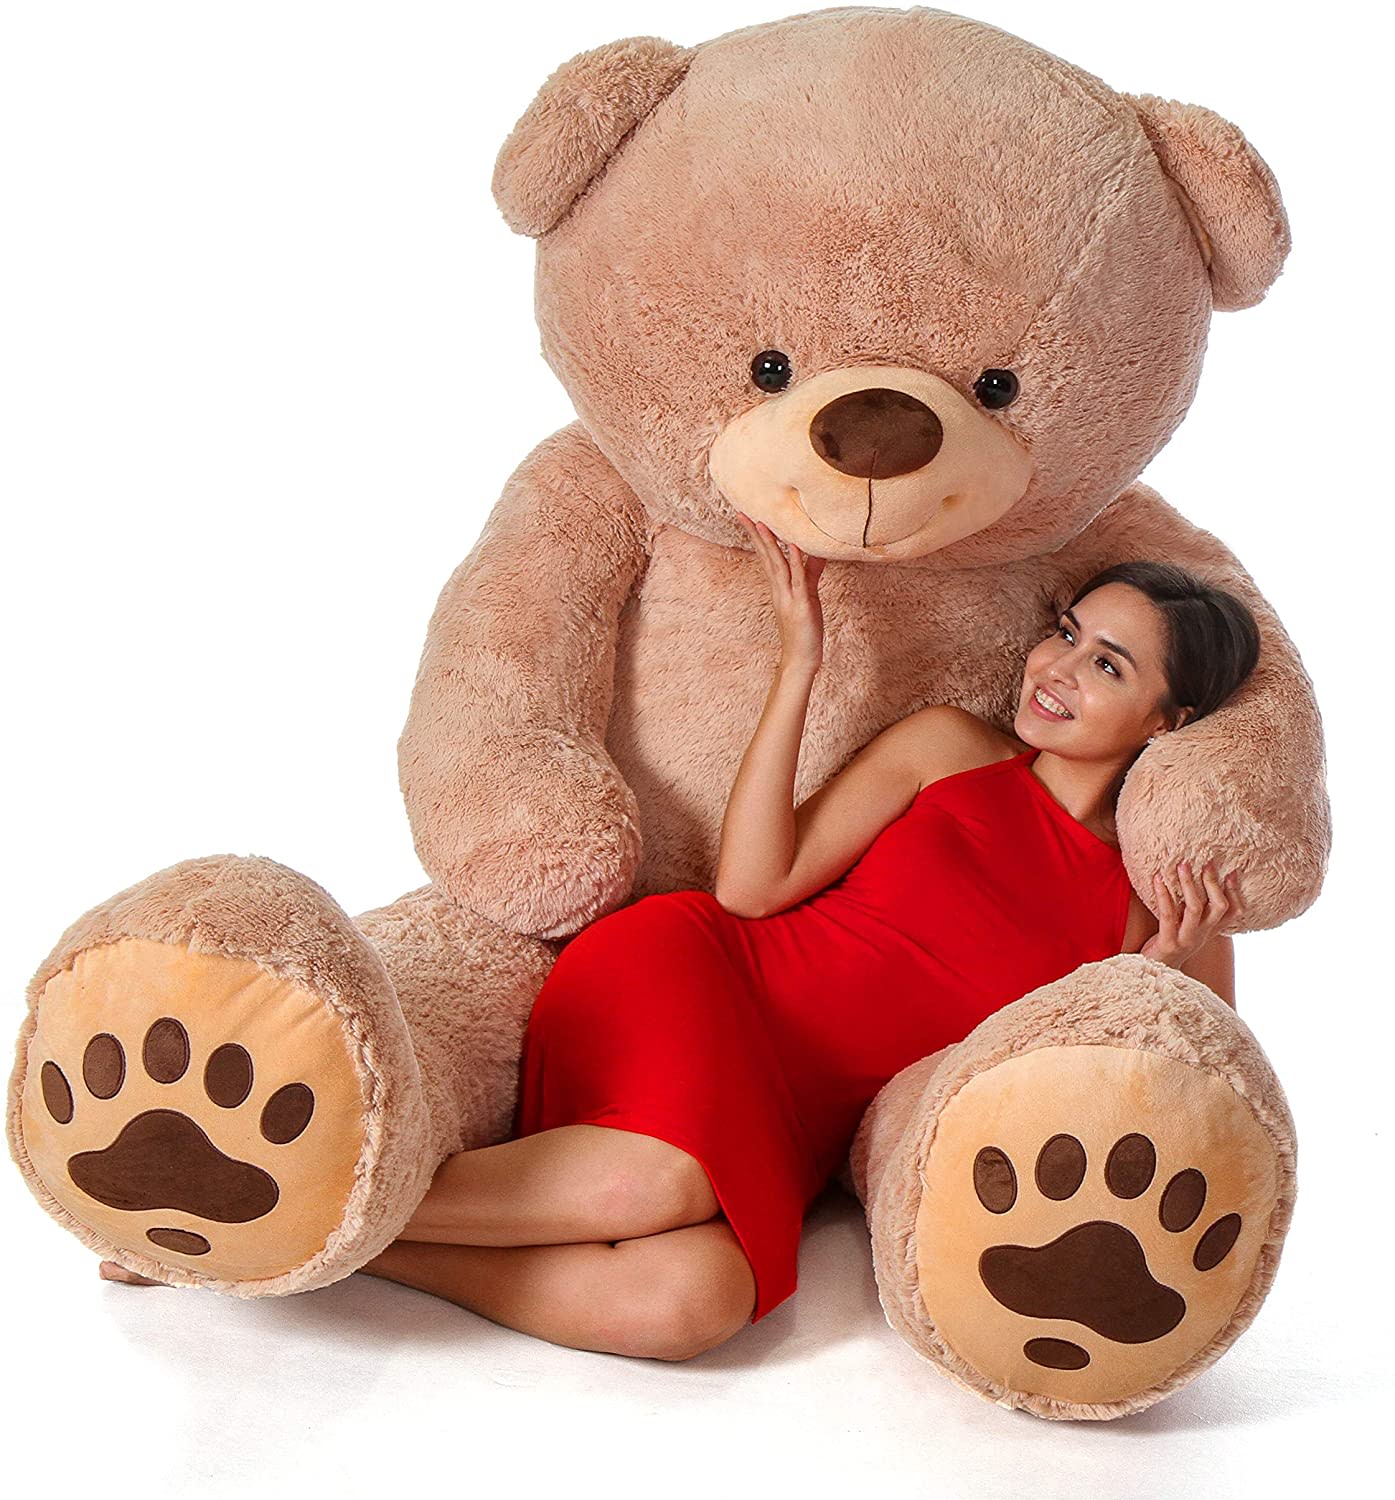 Giant 7 Feet Tall Teddy Bear Huge Size Premium Quality Giant Stuffed Teddy Bear Amber Tan 7